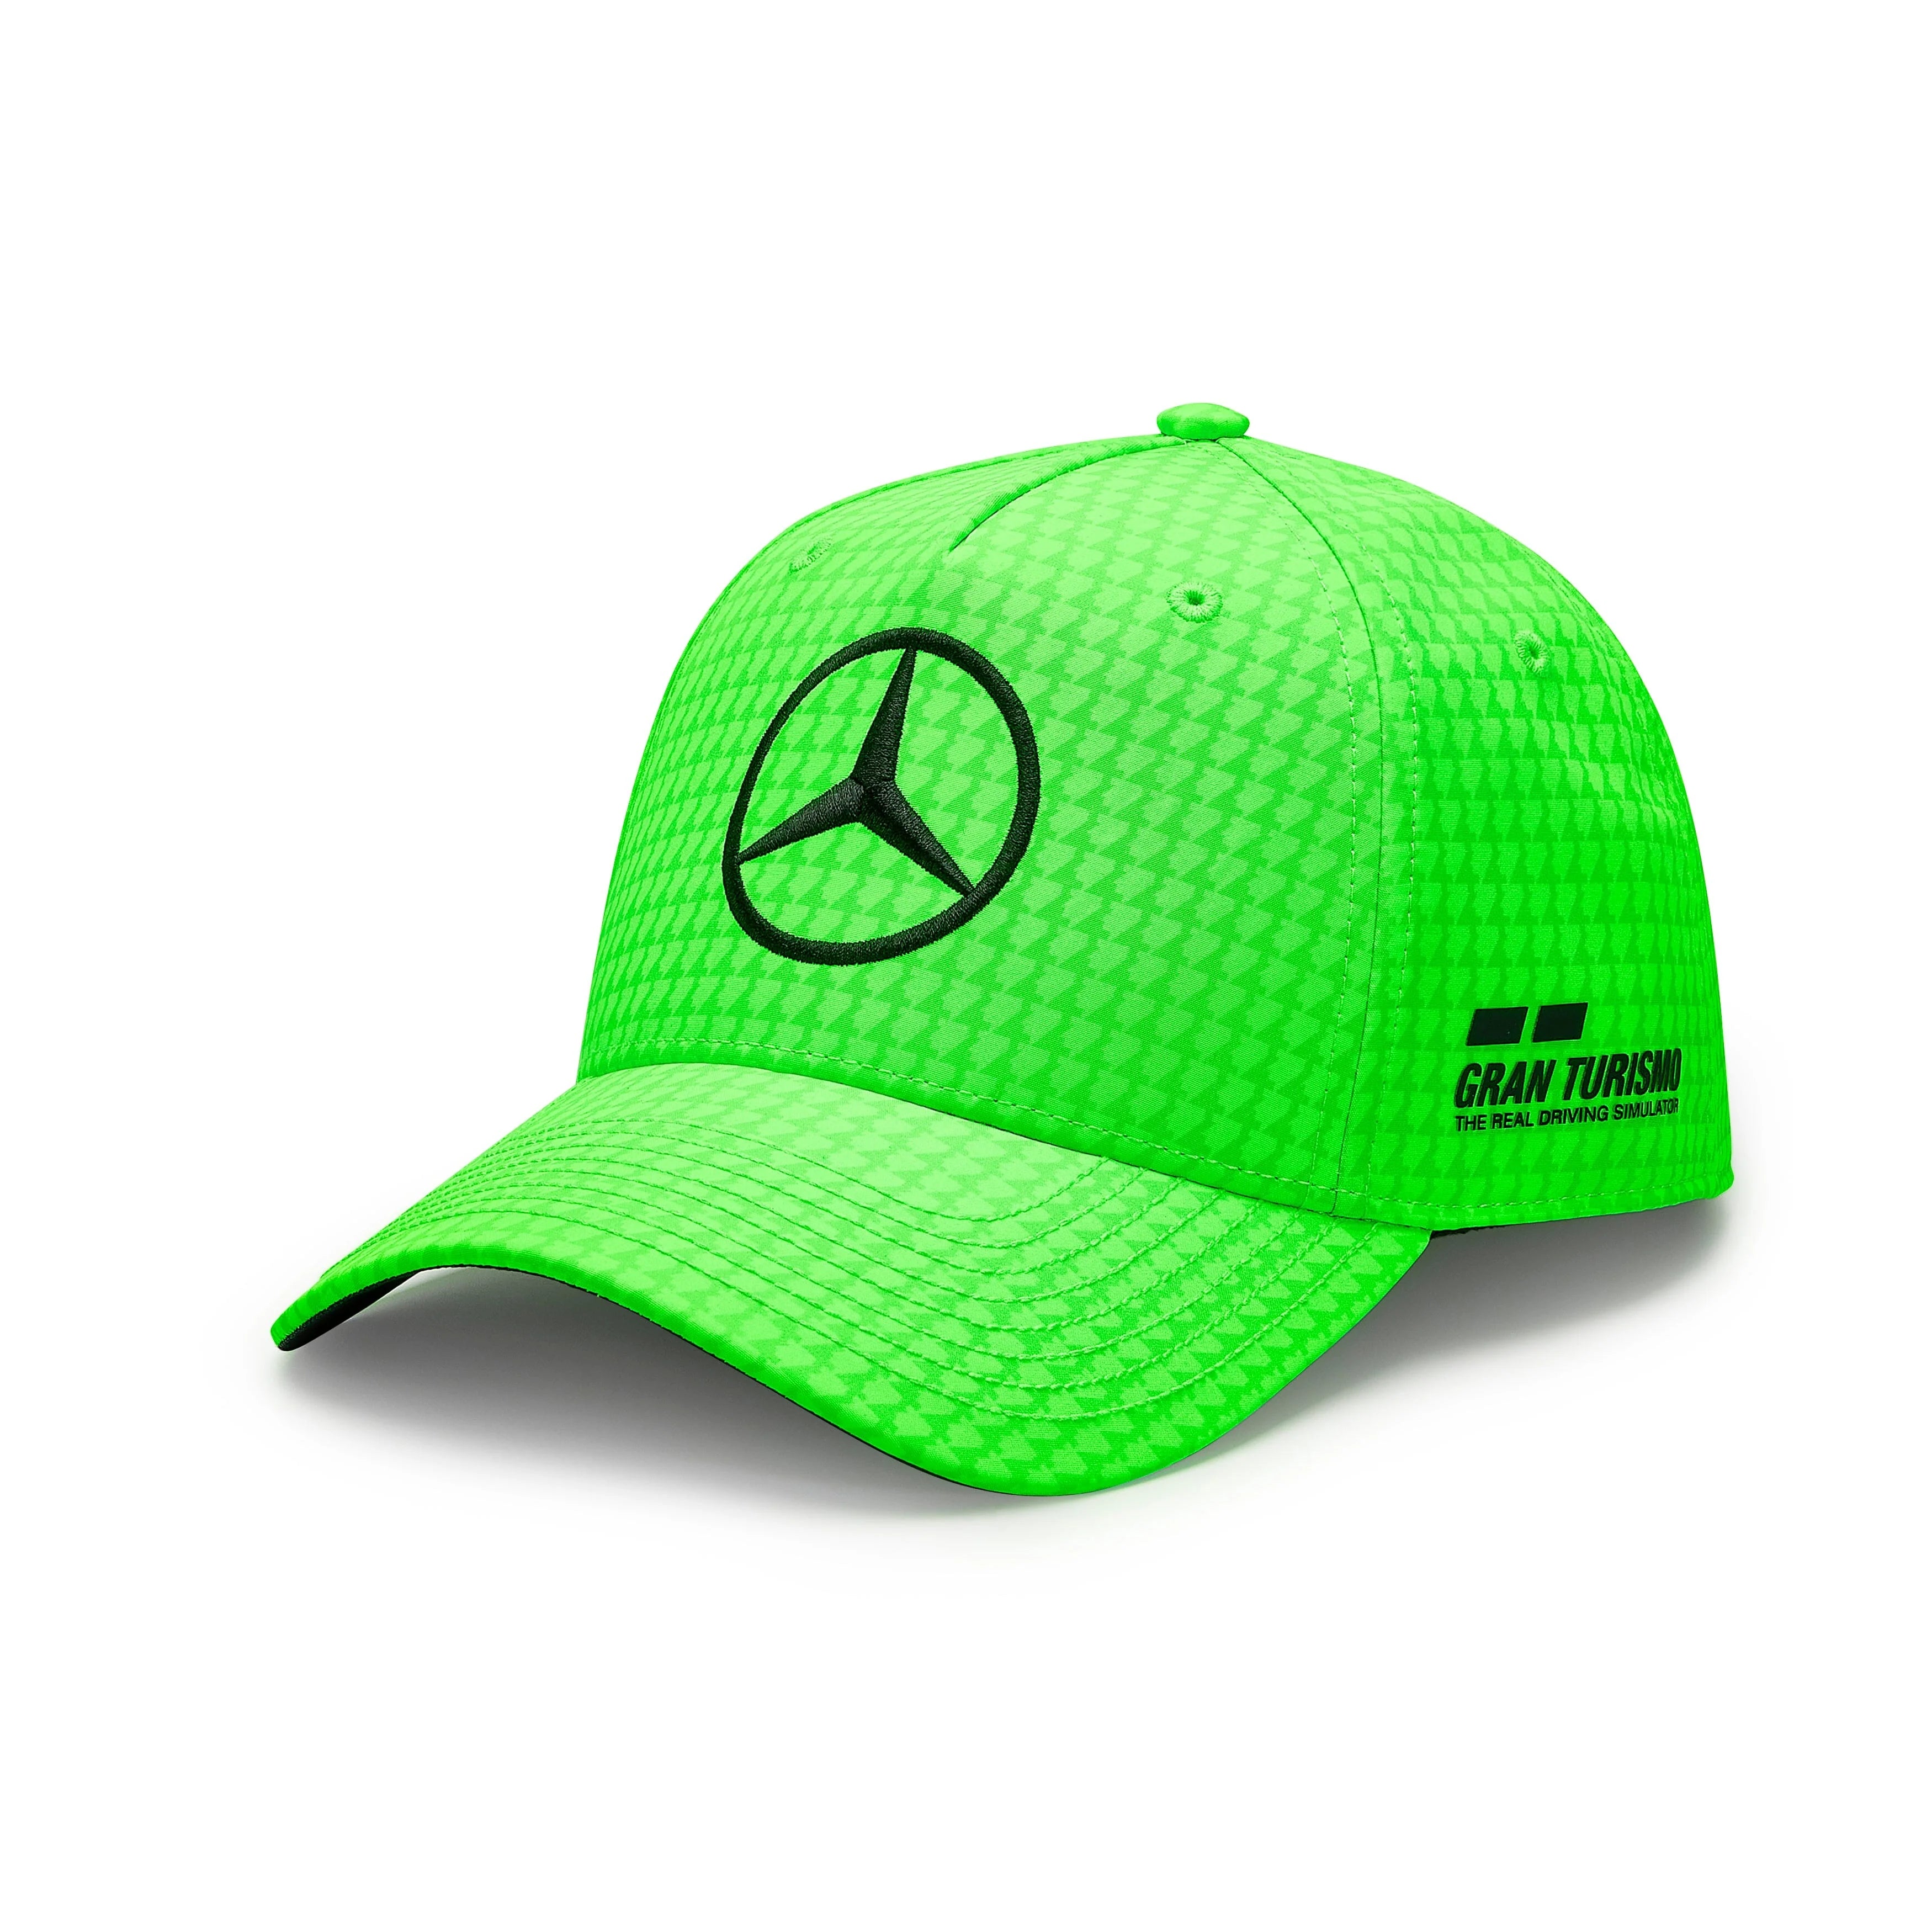 Mercedes AMG Petronas F1 Special Edition Lewis Hamilton British Silverstone GP Hat Neon Green